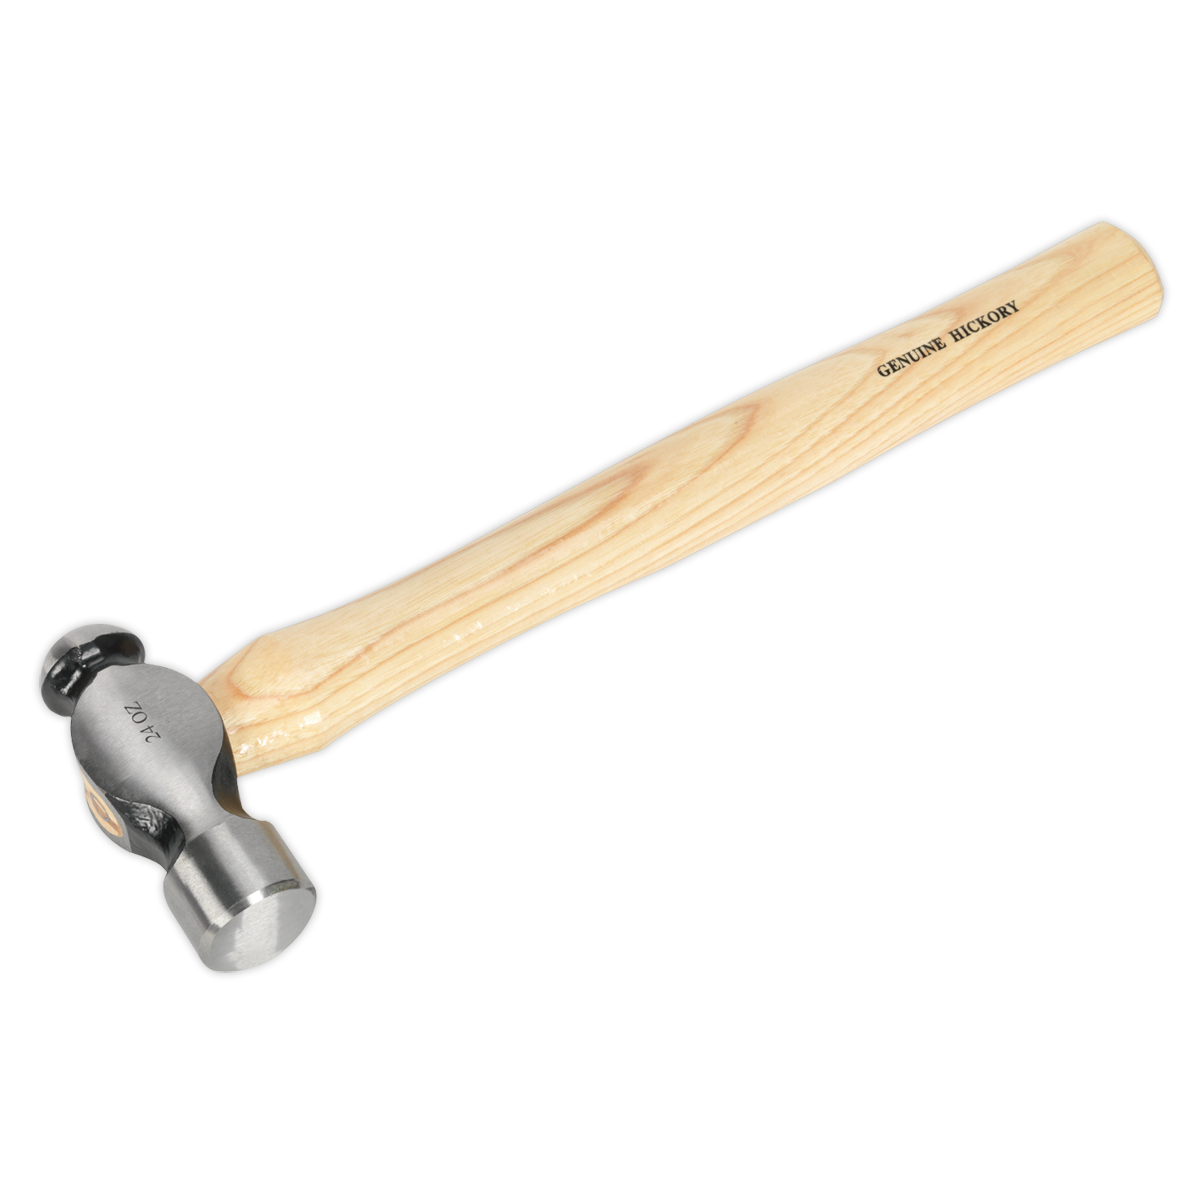 Ball Pein Hammer 1.5lb Hickory Shaft